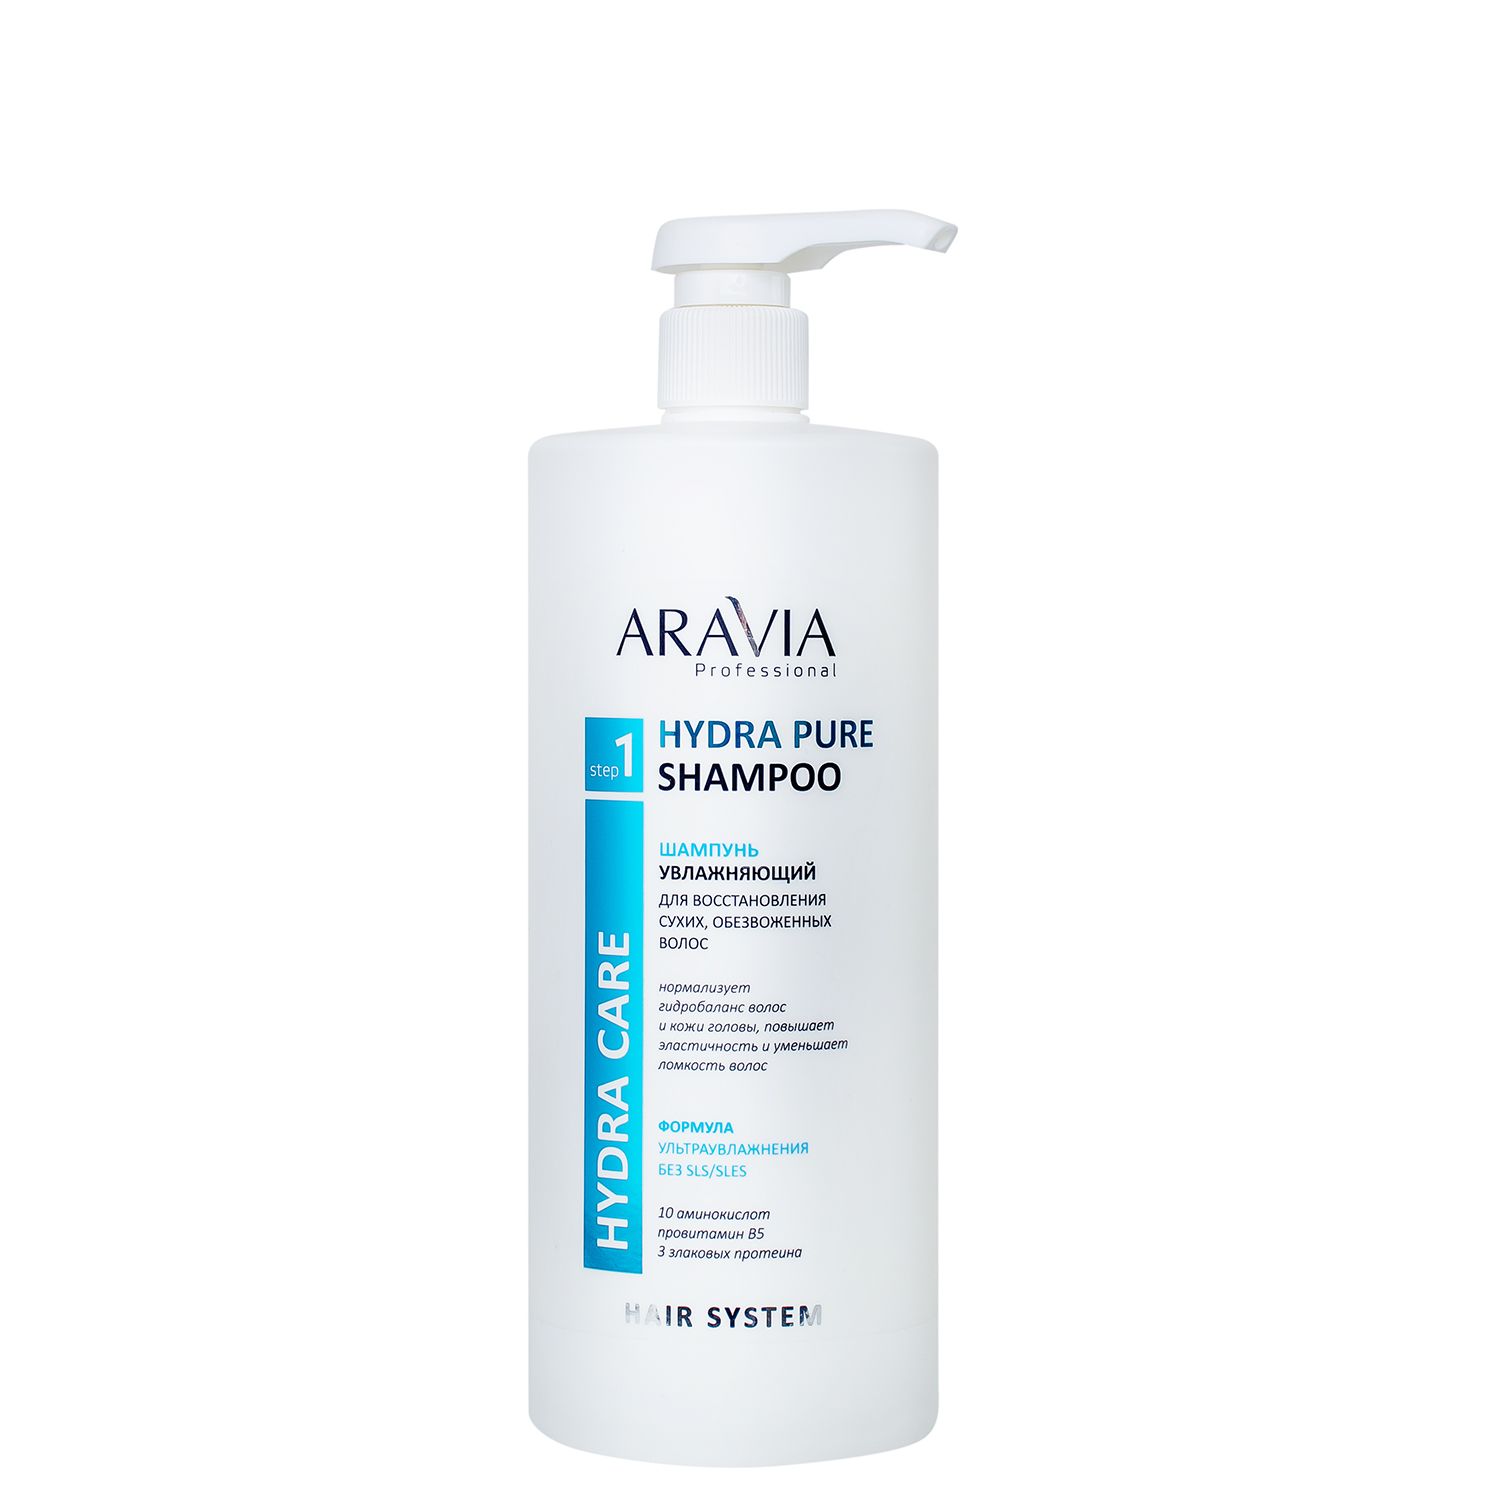 AV Шампунь увлажняющий для восстановления сухих обезвоженных волос Hydra Pure Shampoo, 1 л